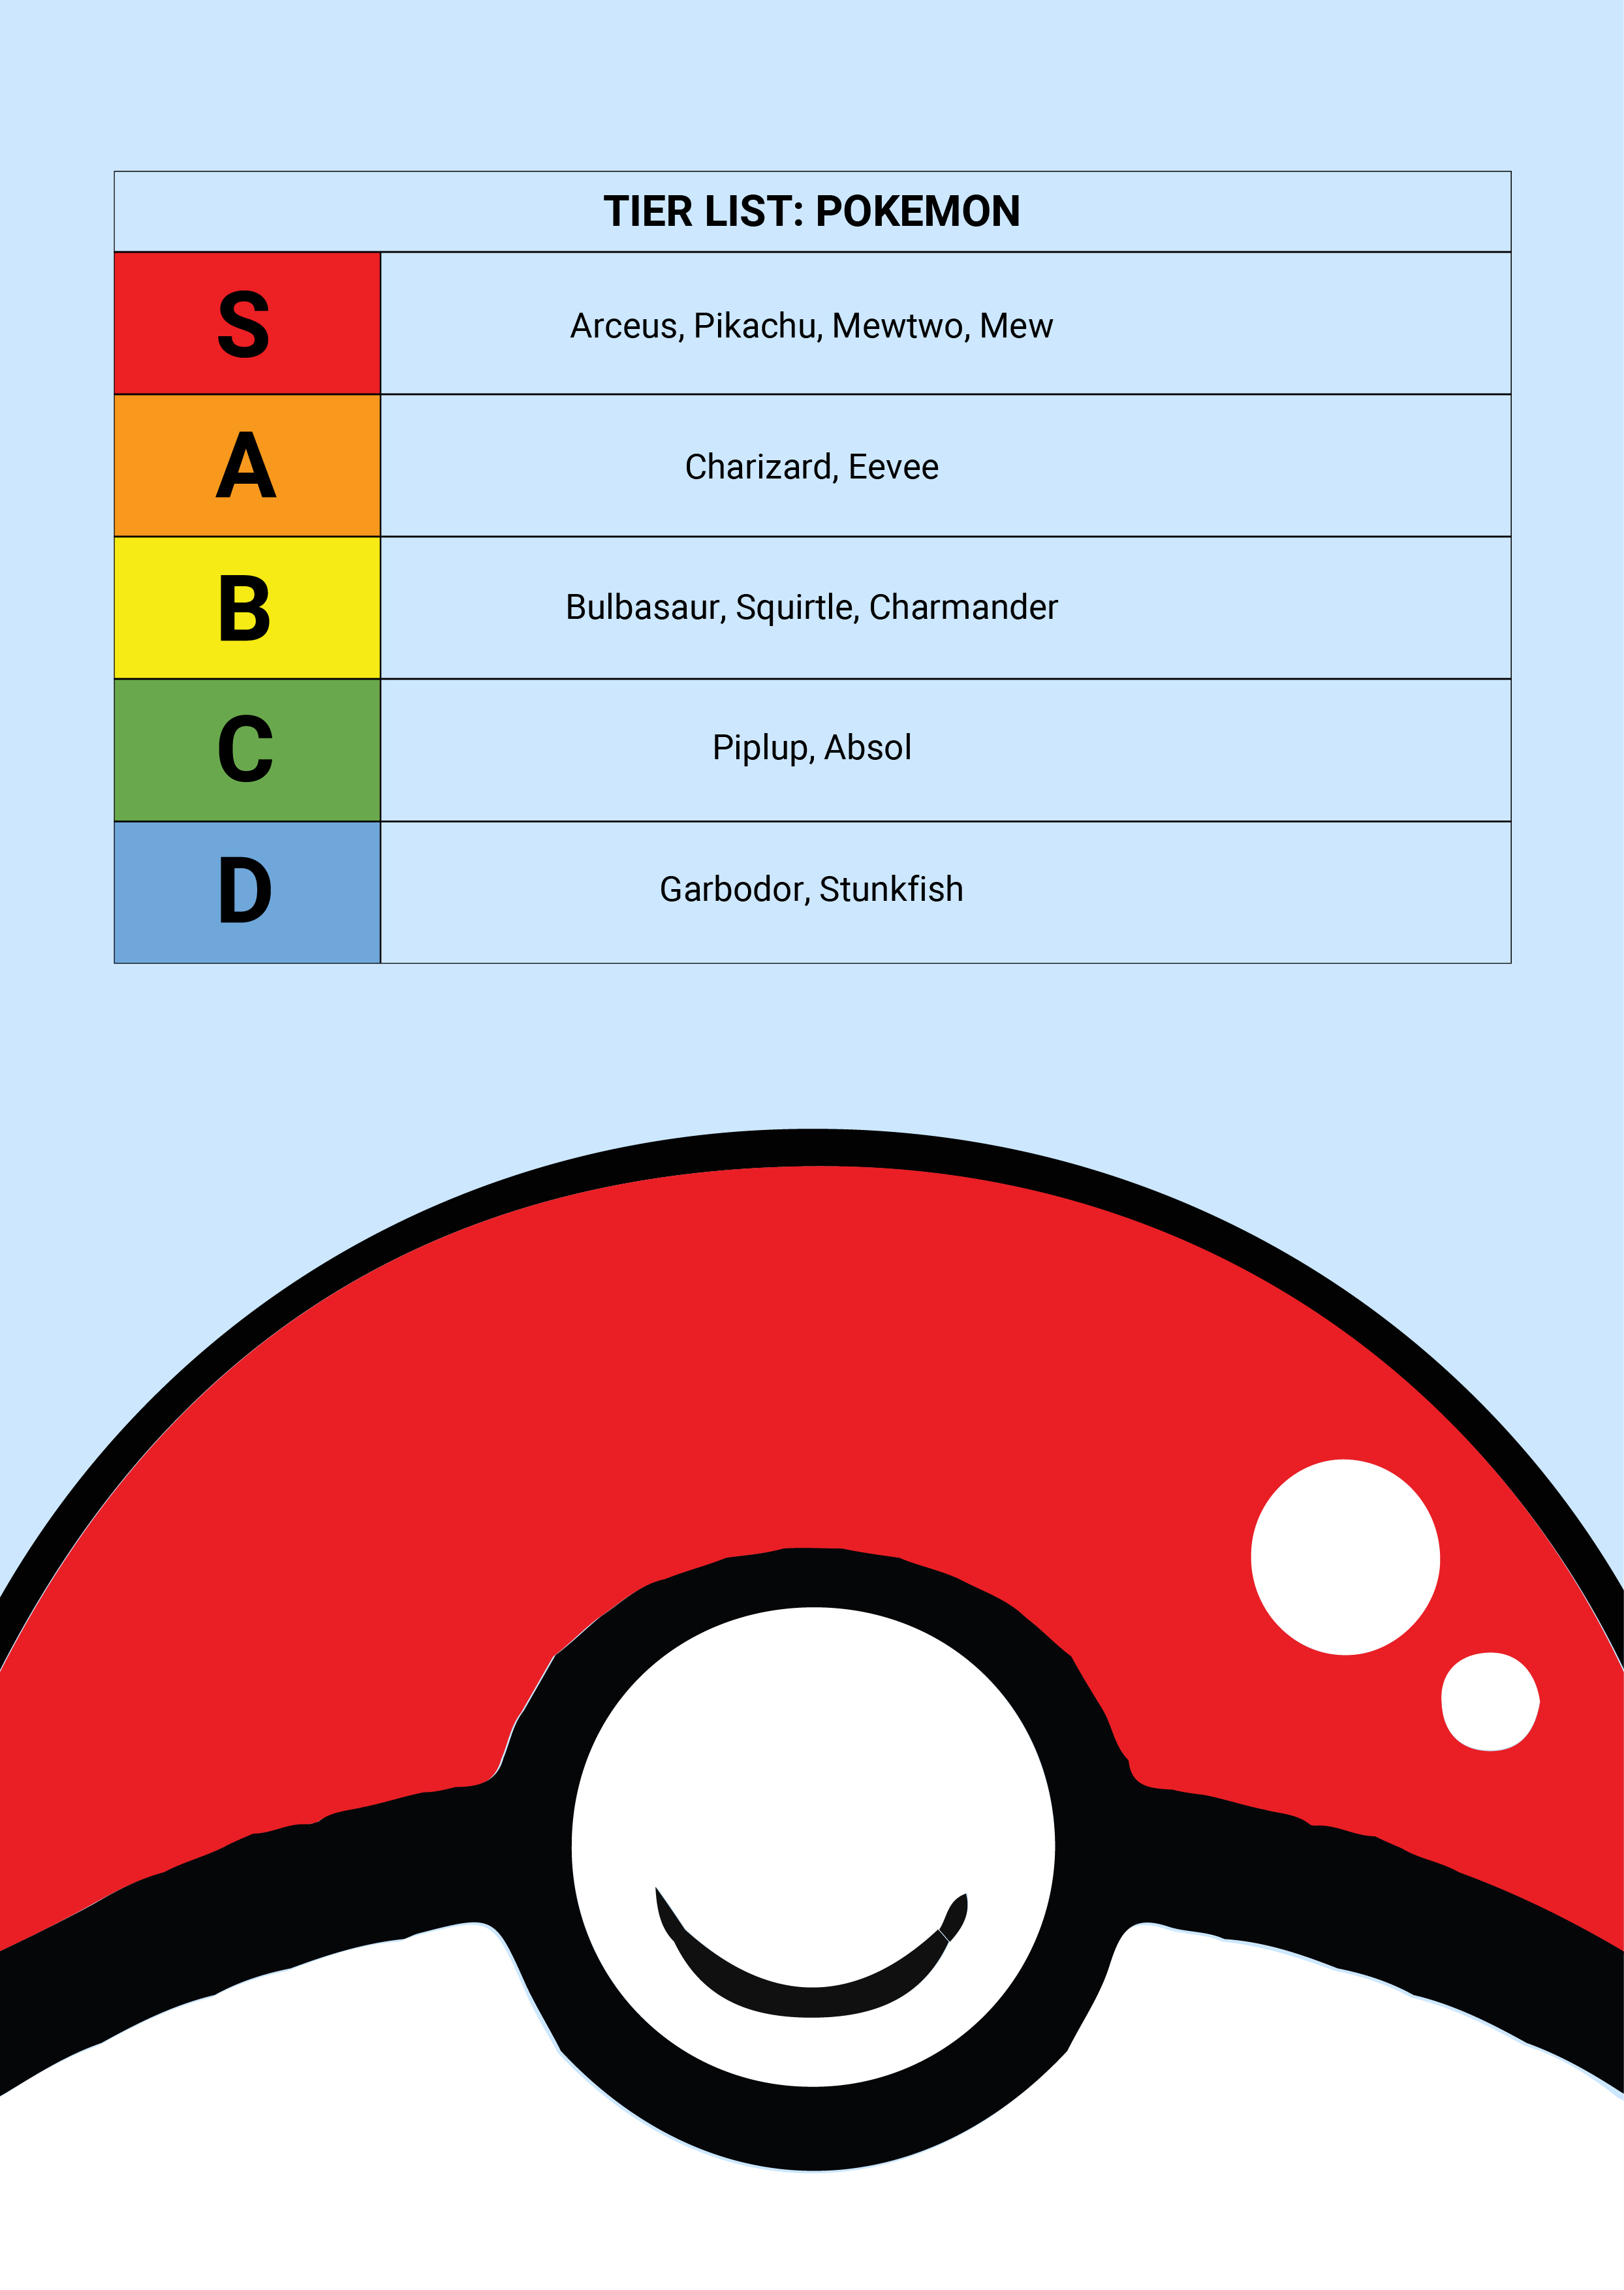 Pokemon type chart template - Free PowerPoint Template